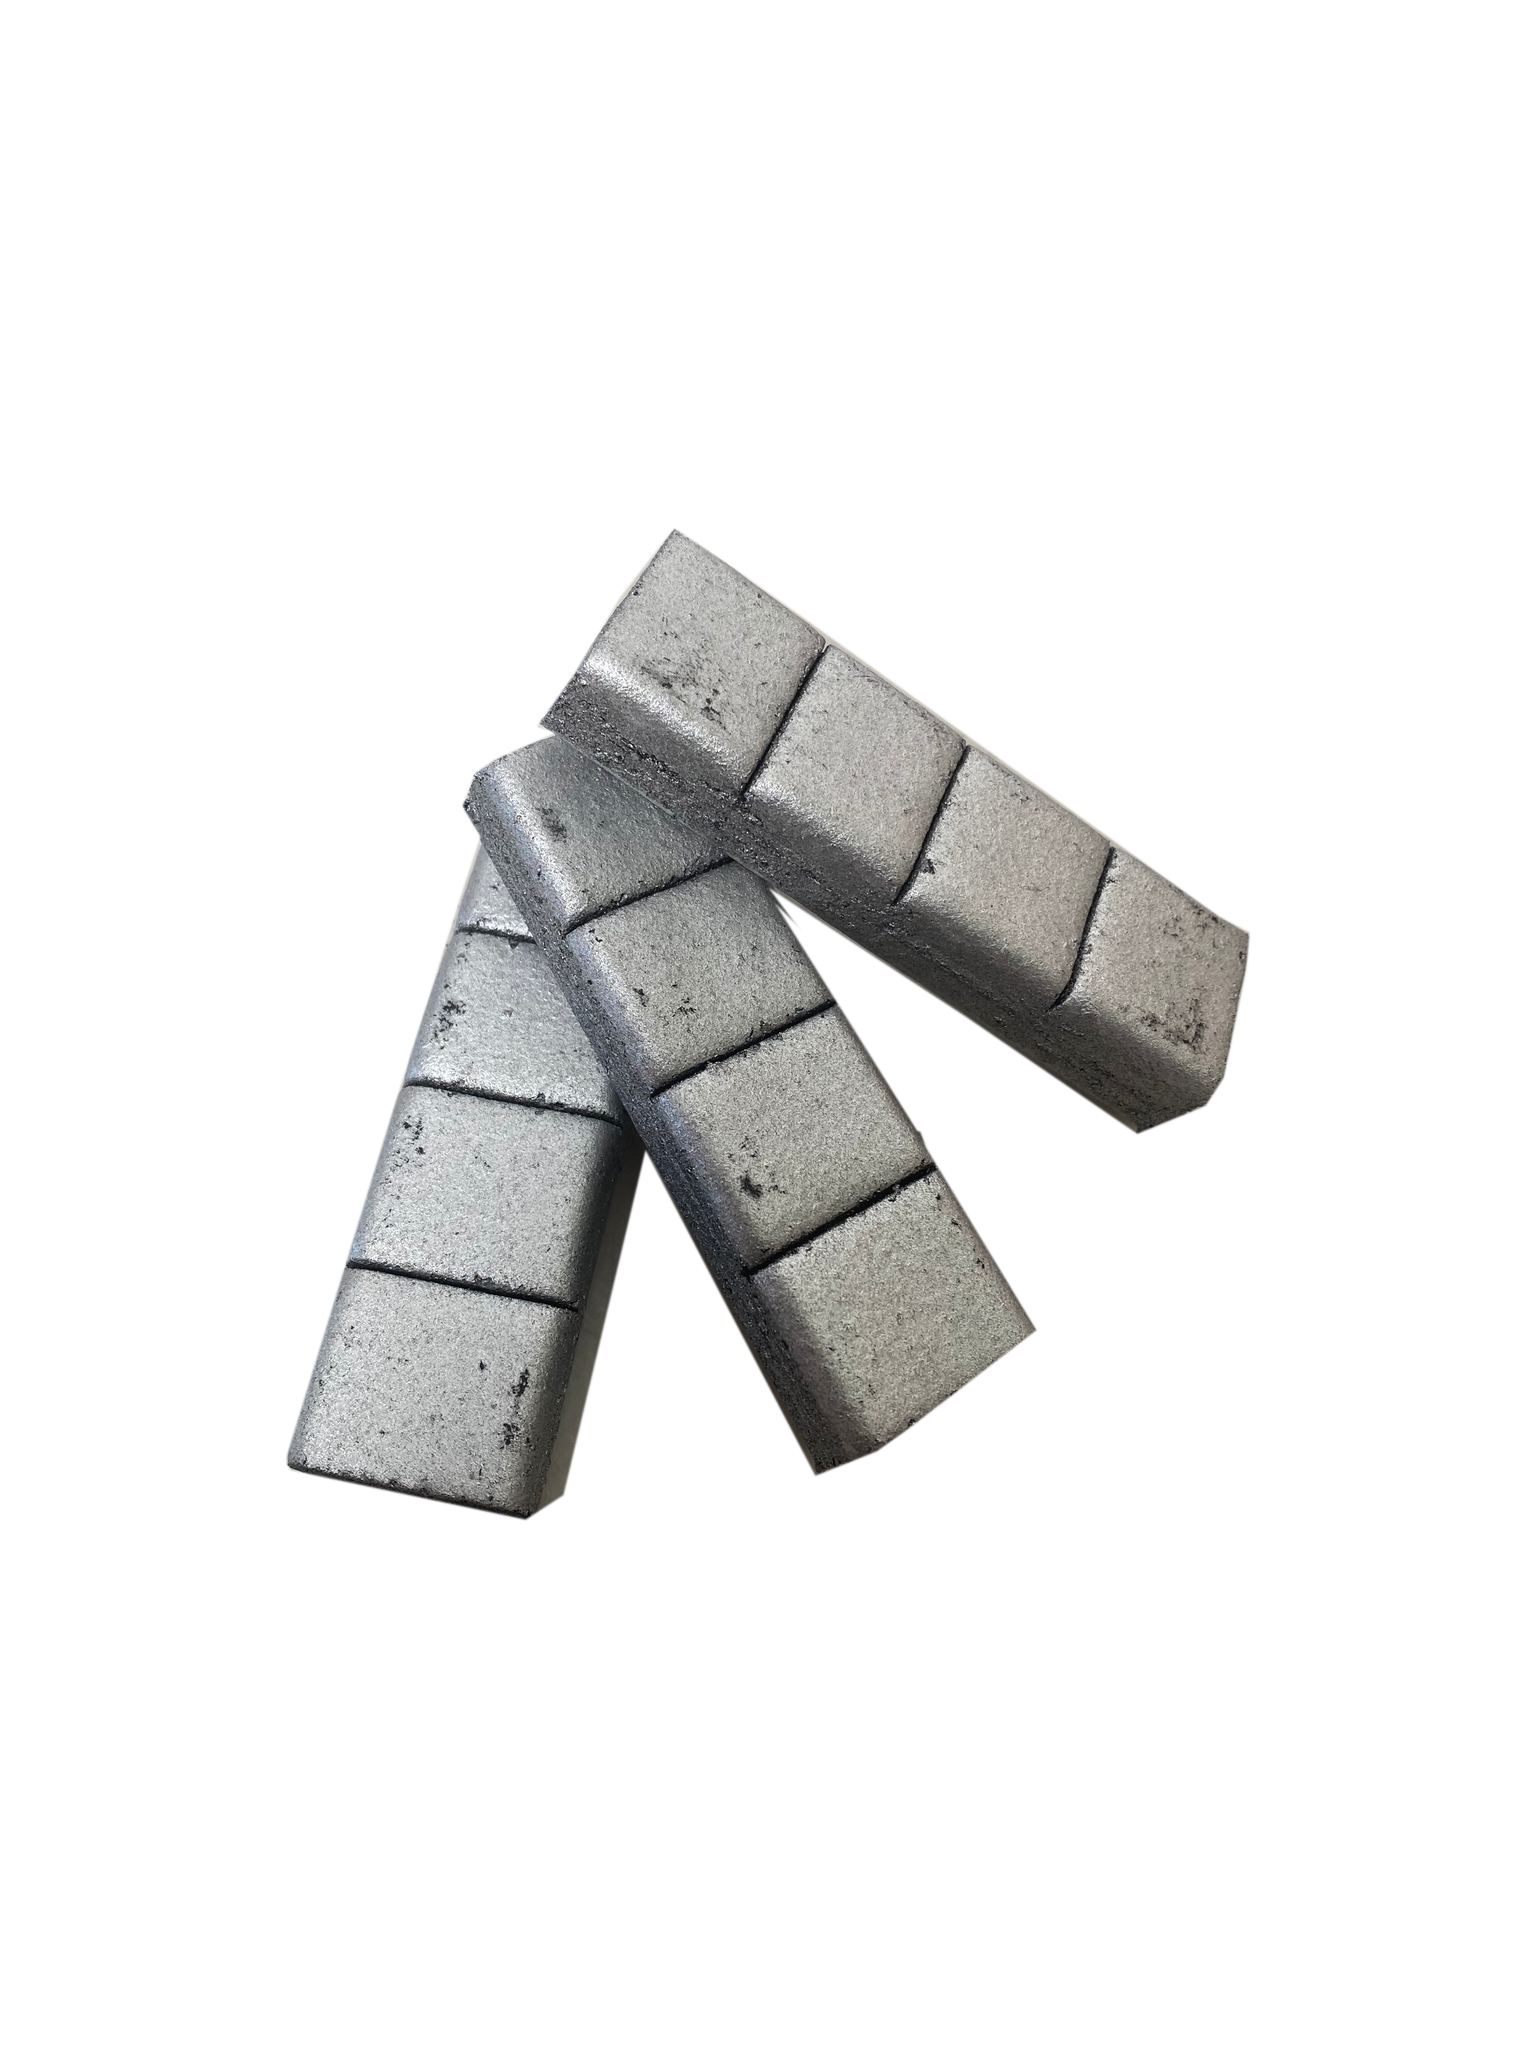 Tangiers (Gen2) Silver Tab Hookah Charcoals - 1 Case - 30 Packs